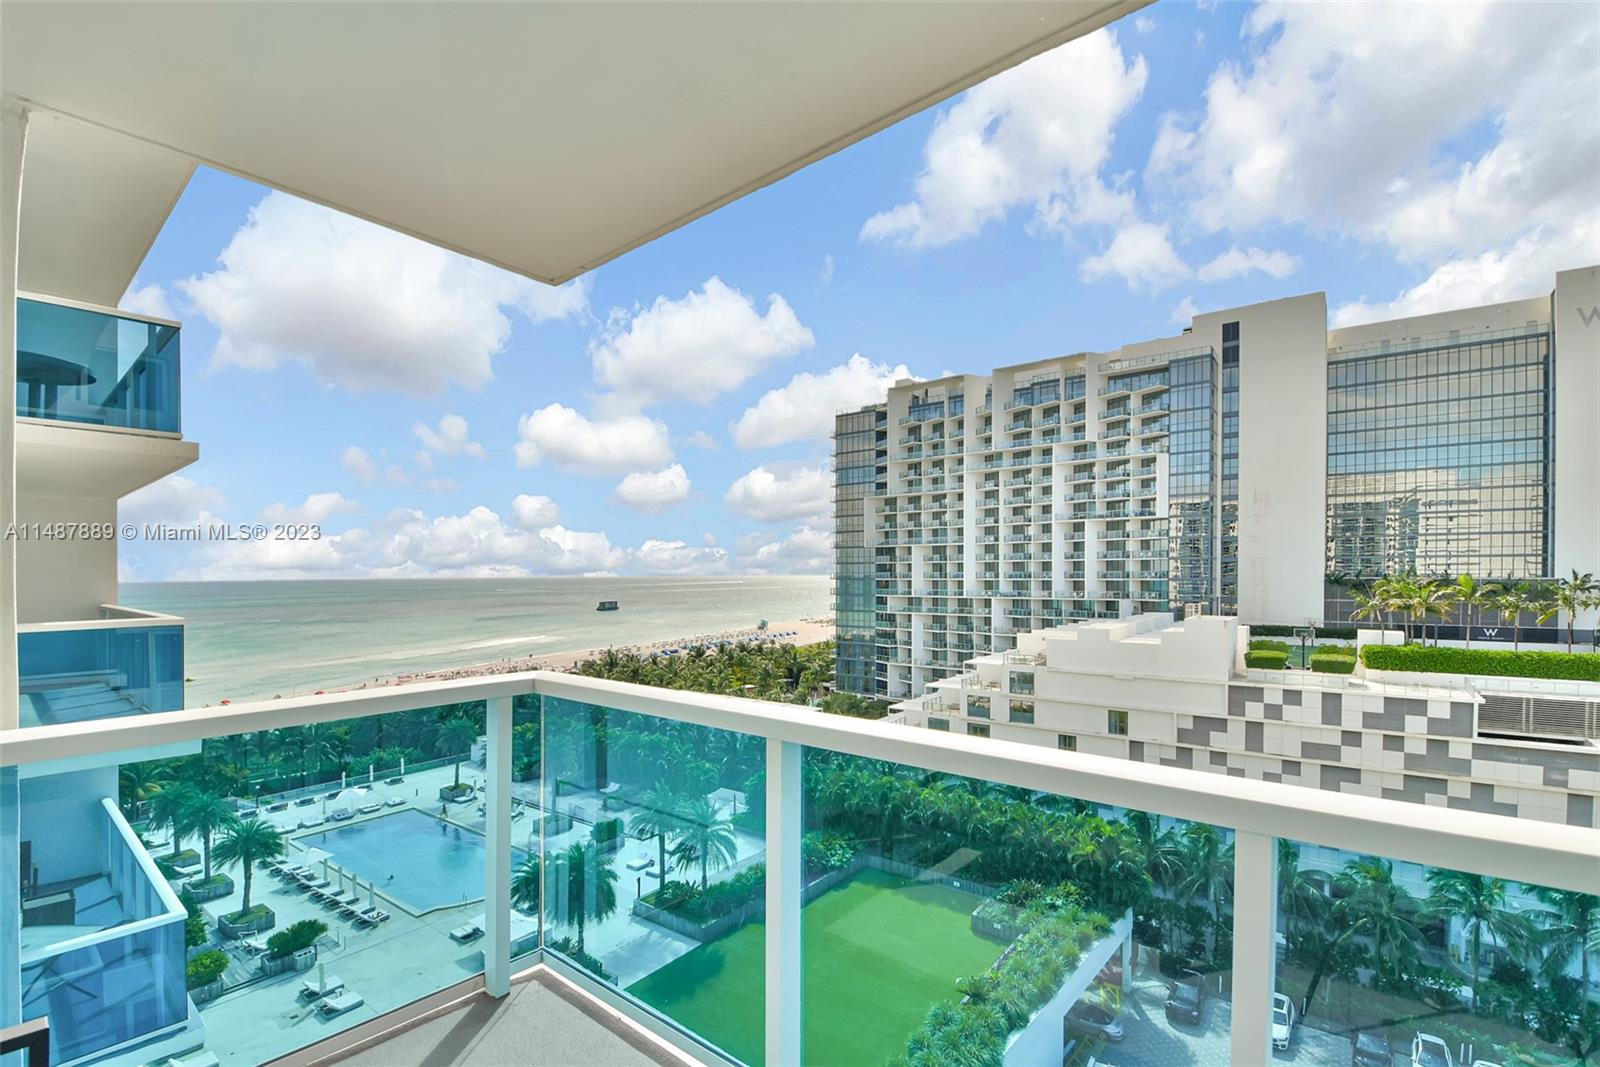 Rental Property at 2301 Collins Ave 1002, Miami Beach, Miami-Dade County, Florida - Bedrooms: 1 
Bathrooms: 1  - $6,000 MO.